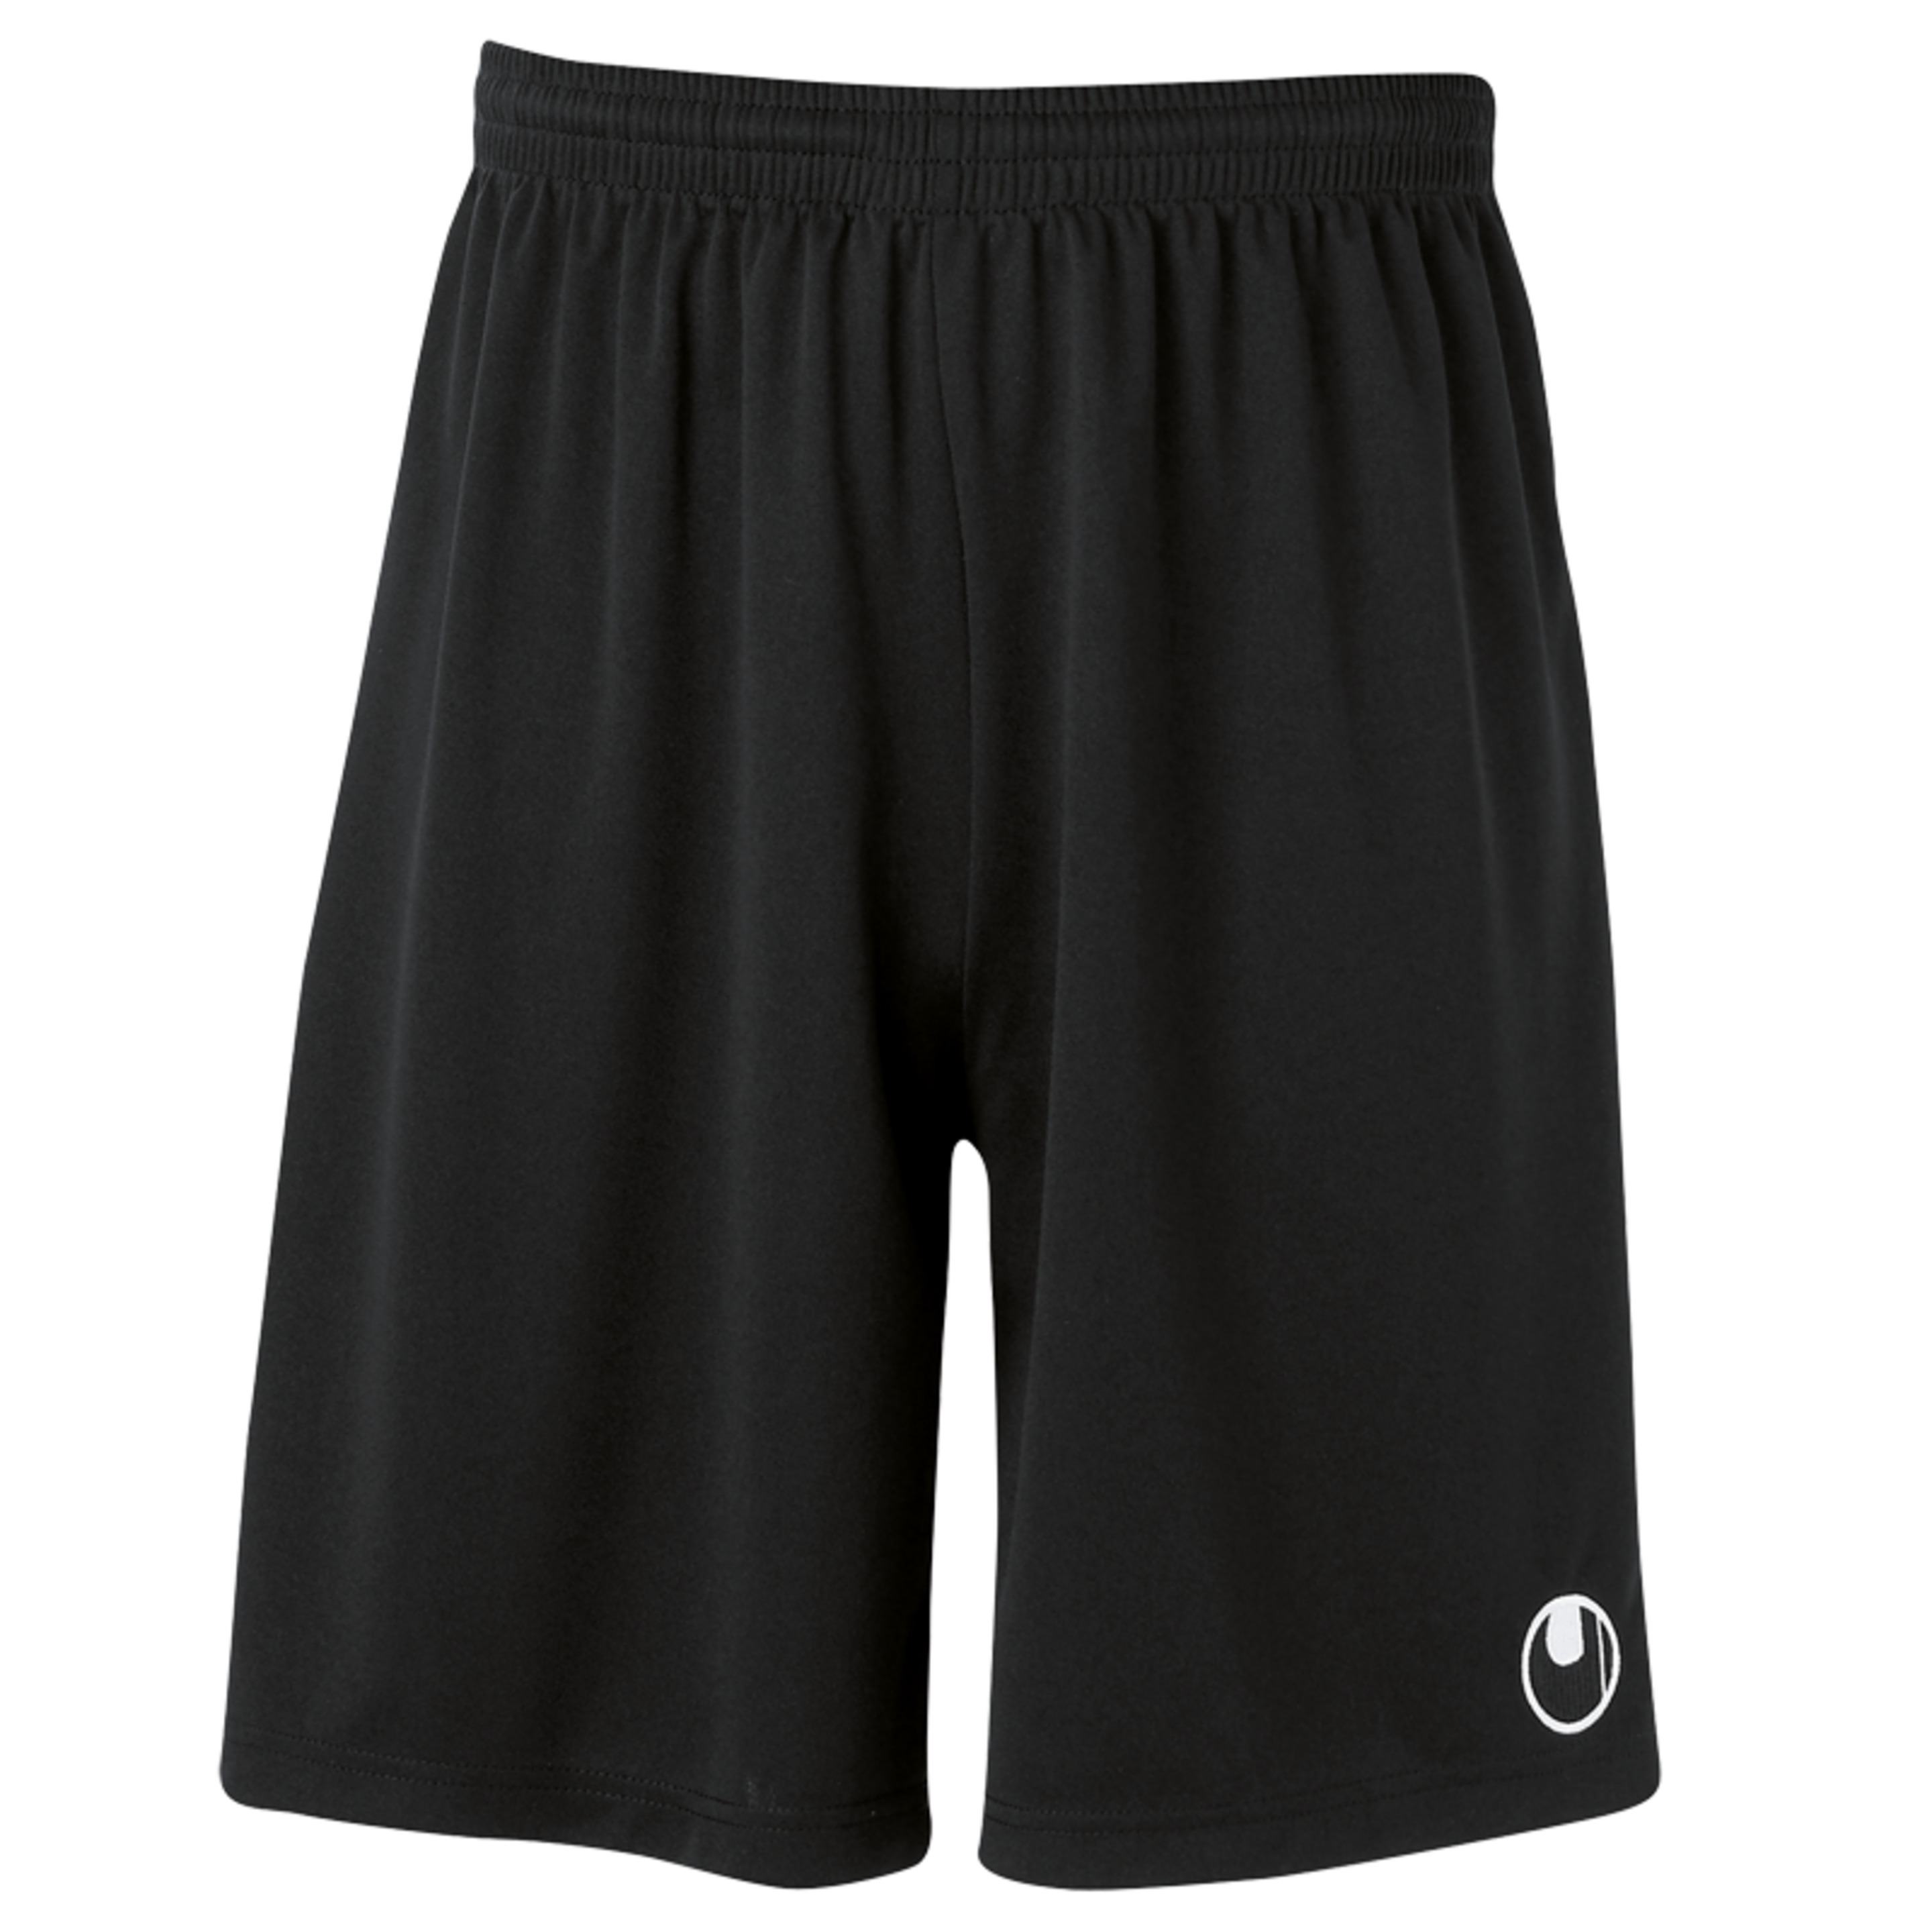 Center Ii Shorts With Slip Inside Negro Uhlsport - negro - Center Ii Shorts With Slip Inside Negro Uhlsport  MKP